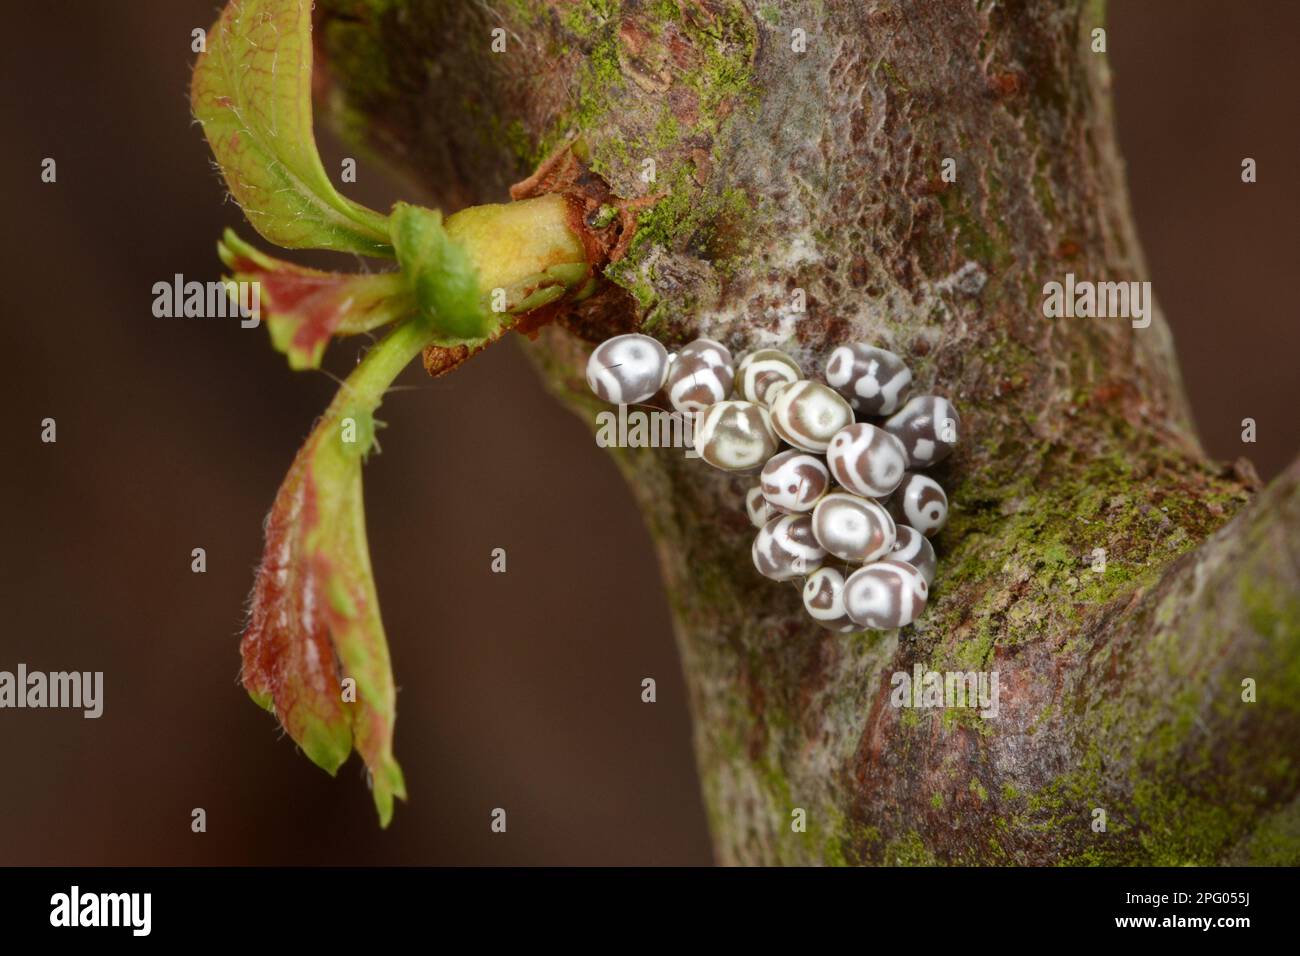 Lappet (Gastropacha quercifolia) Moth cluster of eggs, laid on hawthorn twig, Oxfordshire, England, United Kingdom Stock Photo